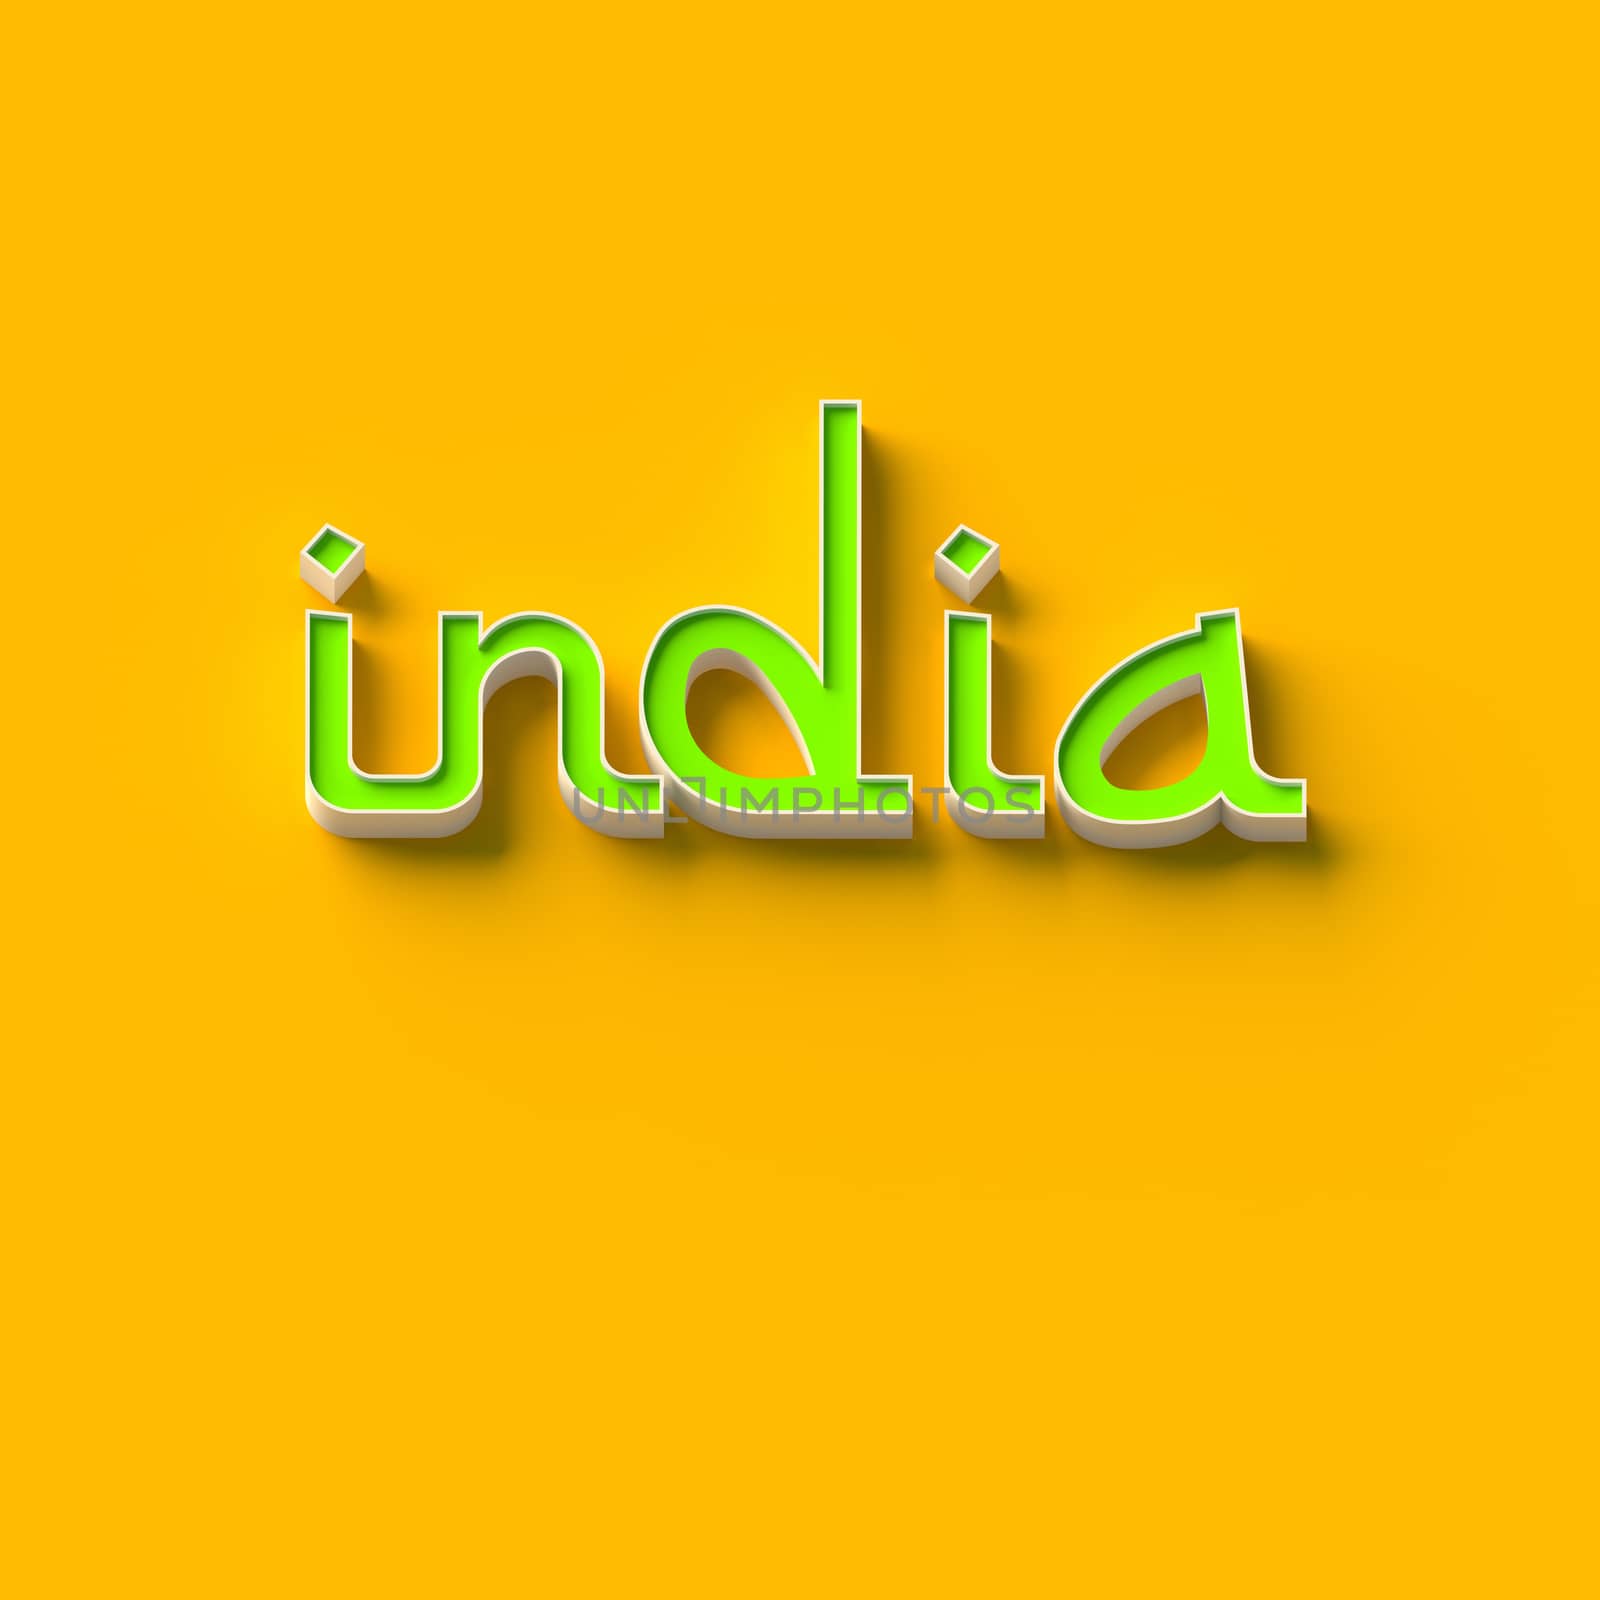 3D RENDERING WORDS "india" by PrettyTG